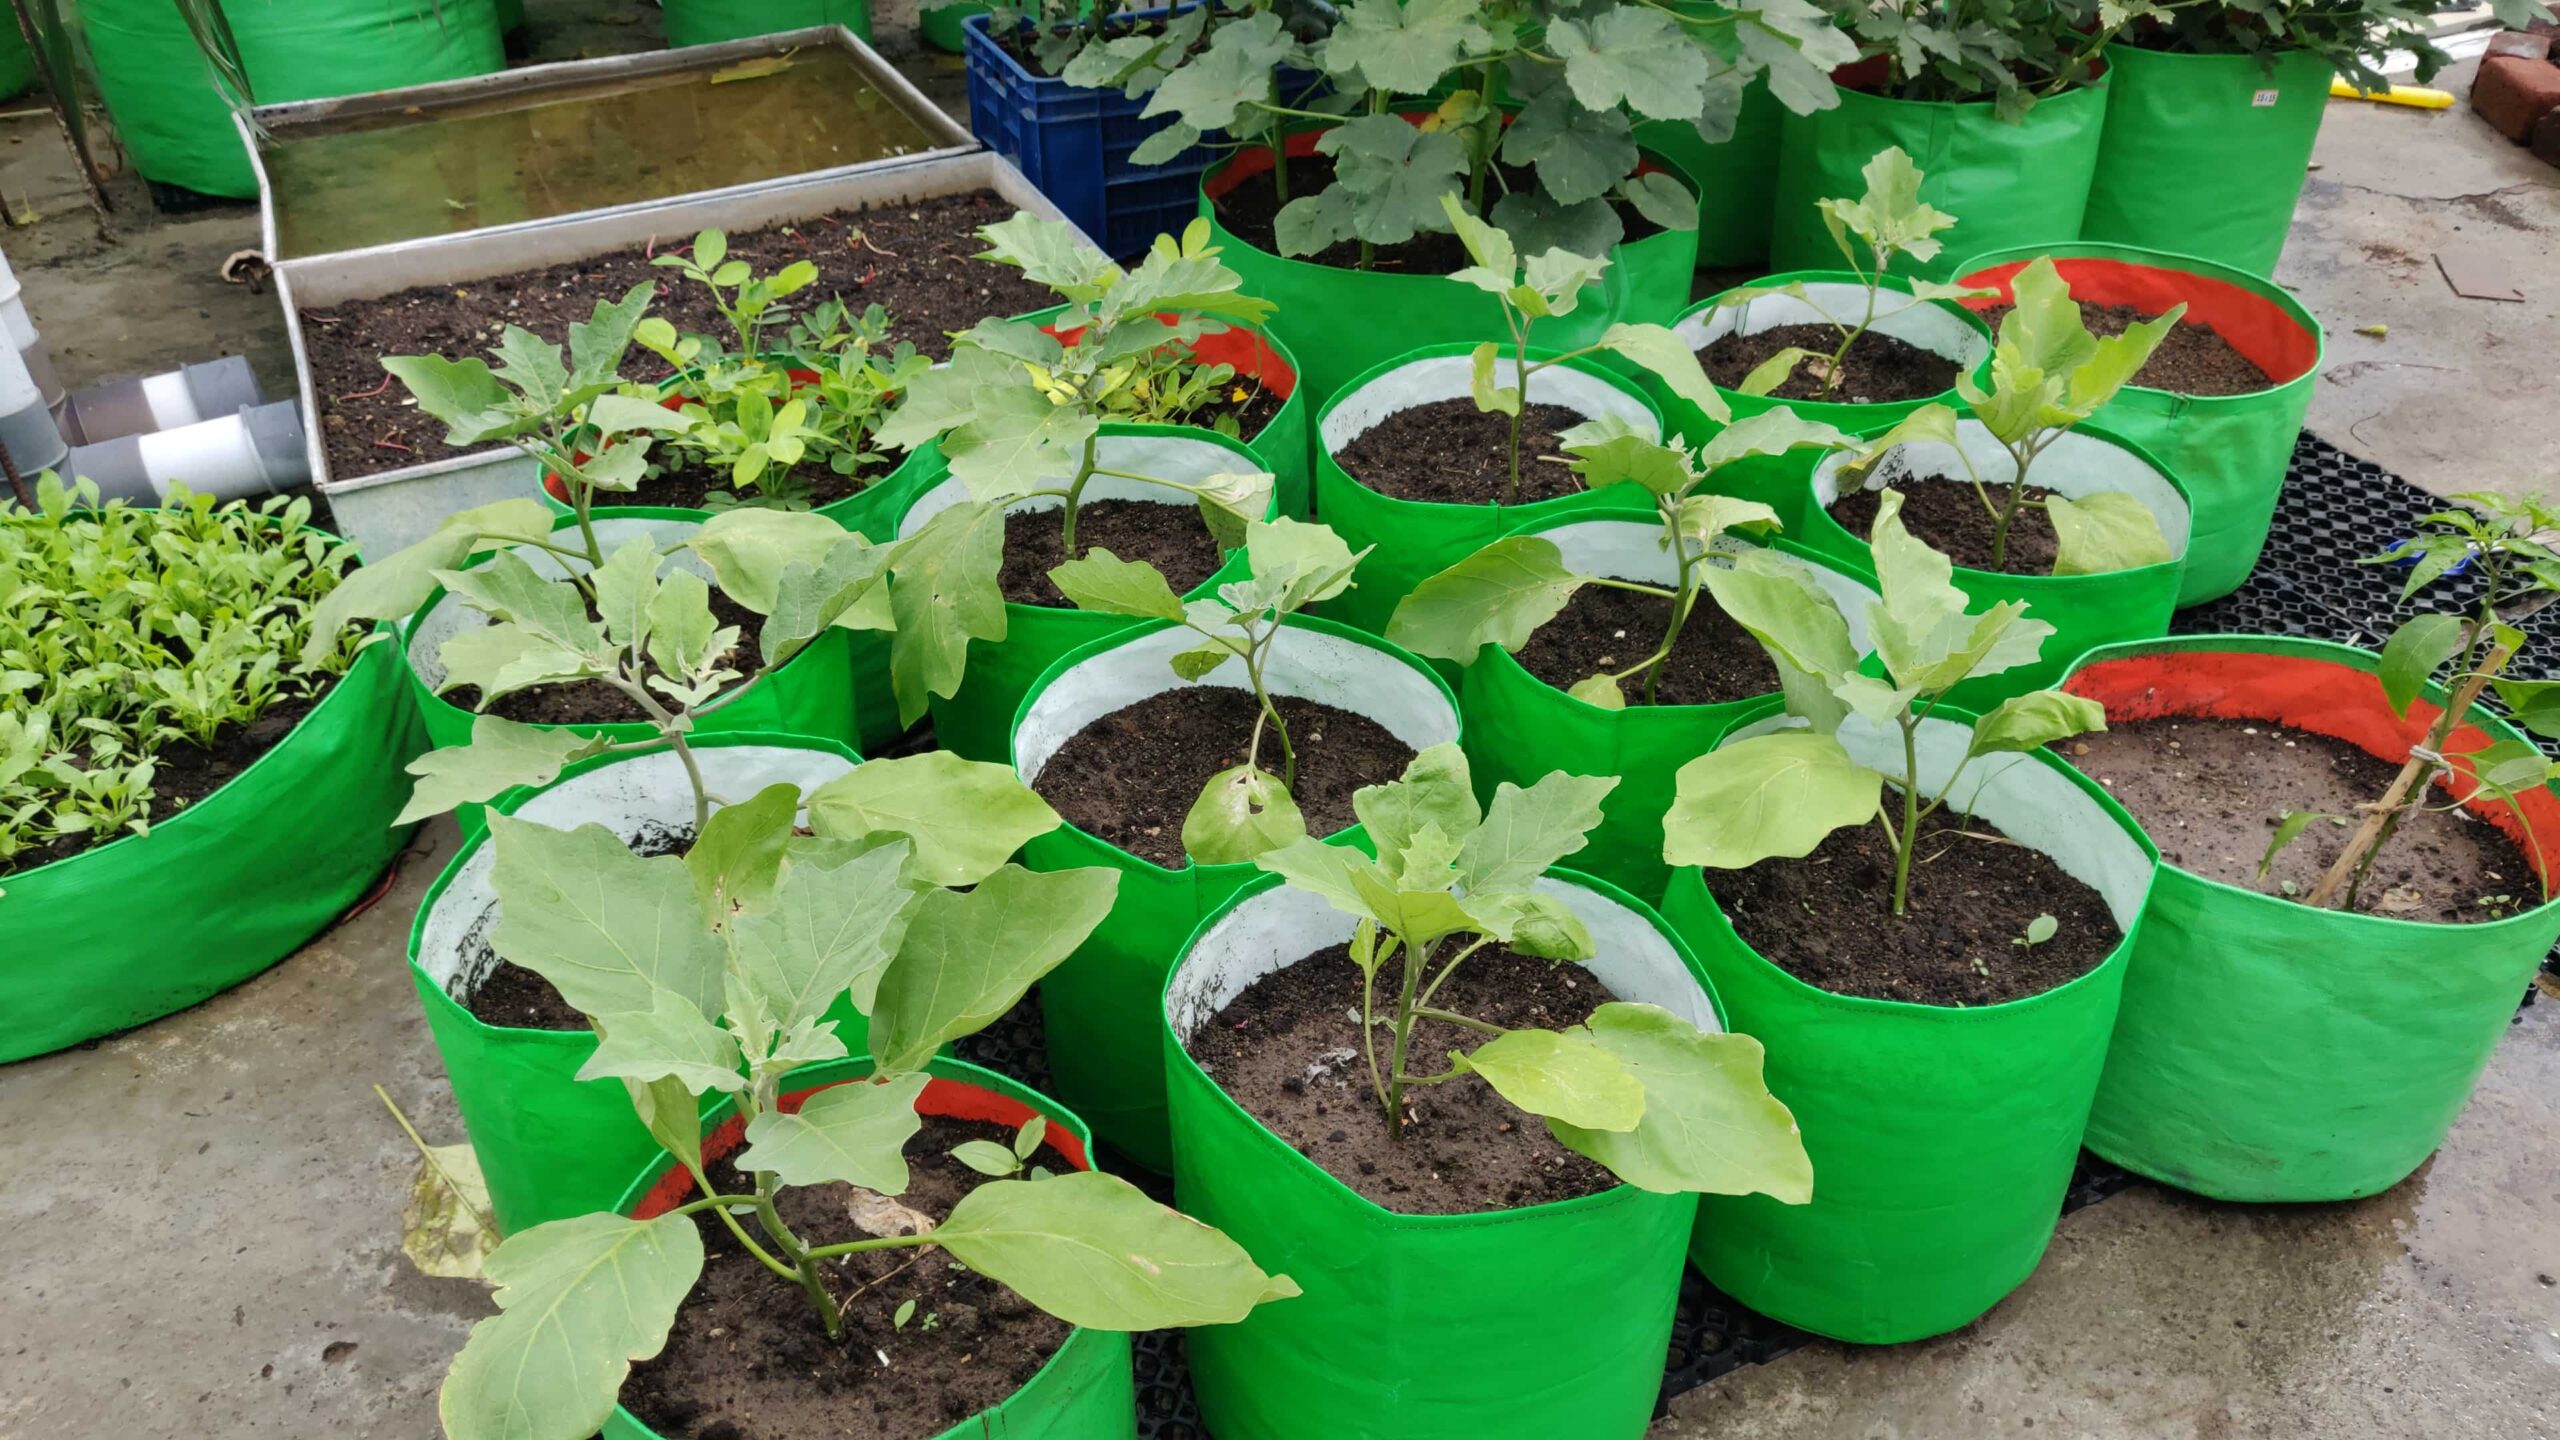 Benefits Of Gardening In Grow Bags! - Organicbazar Blog